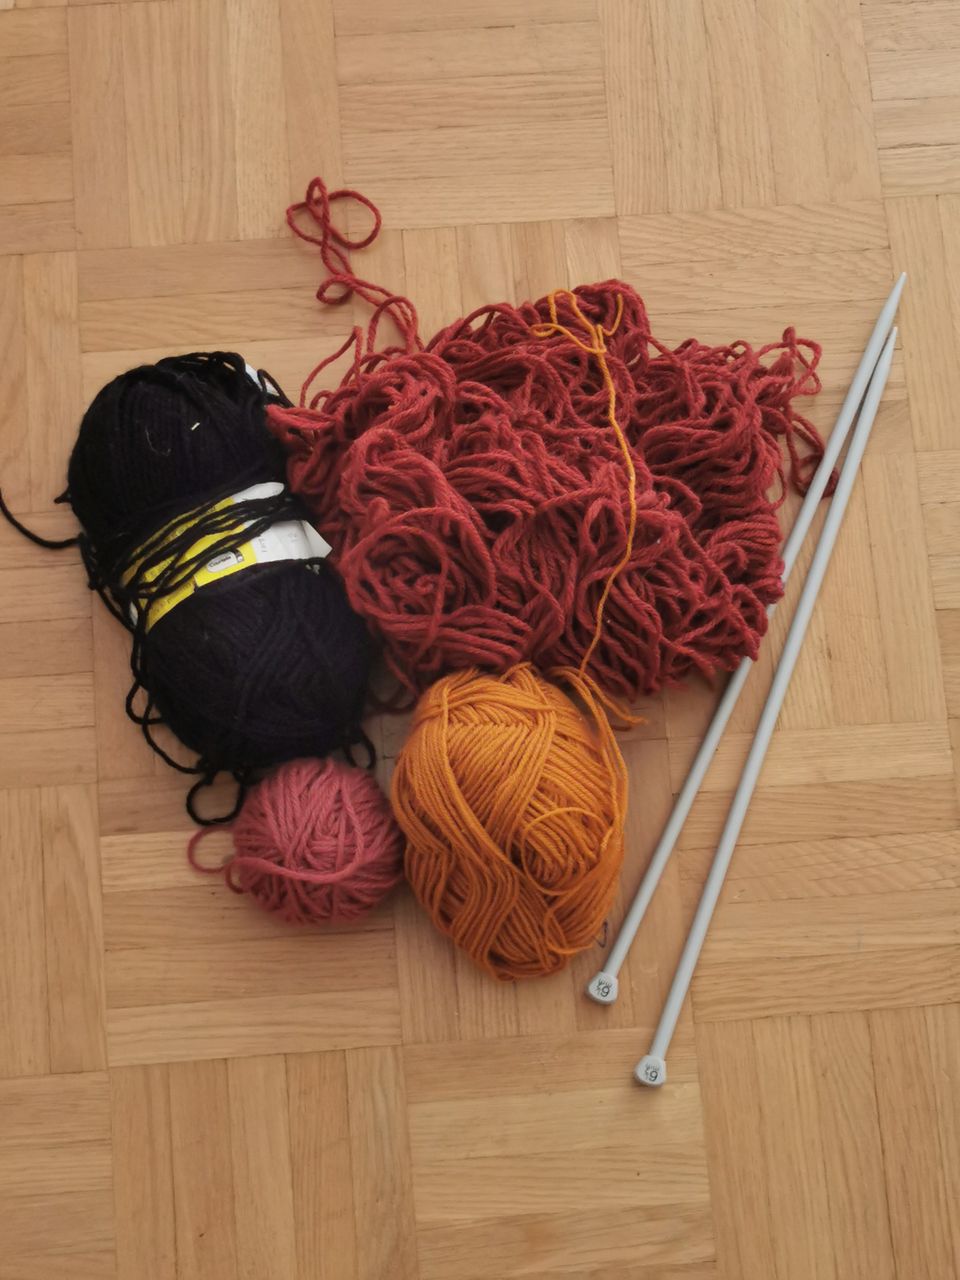 Lot wool and knitting needles